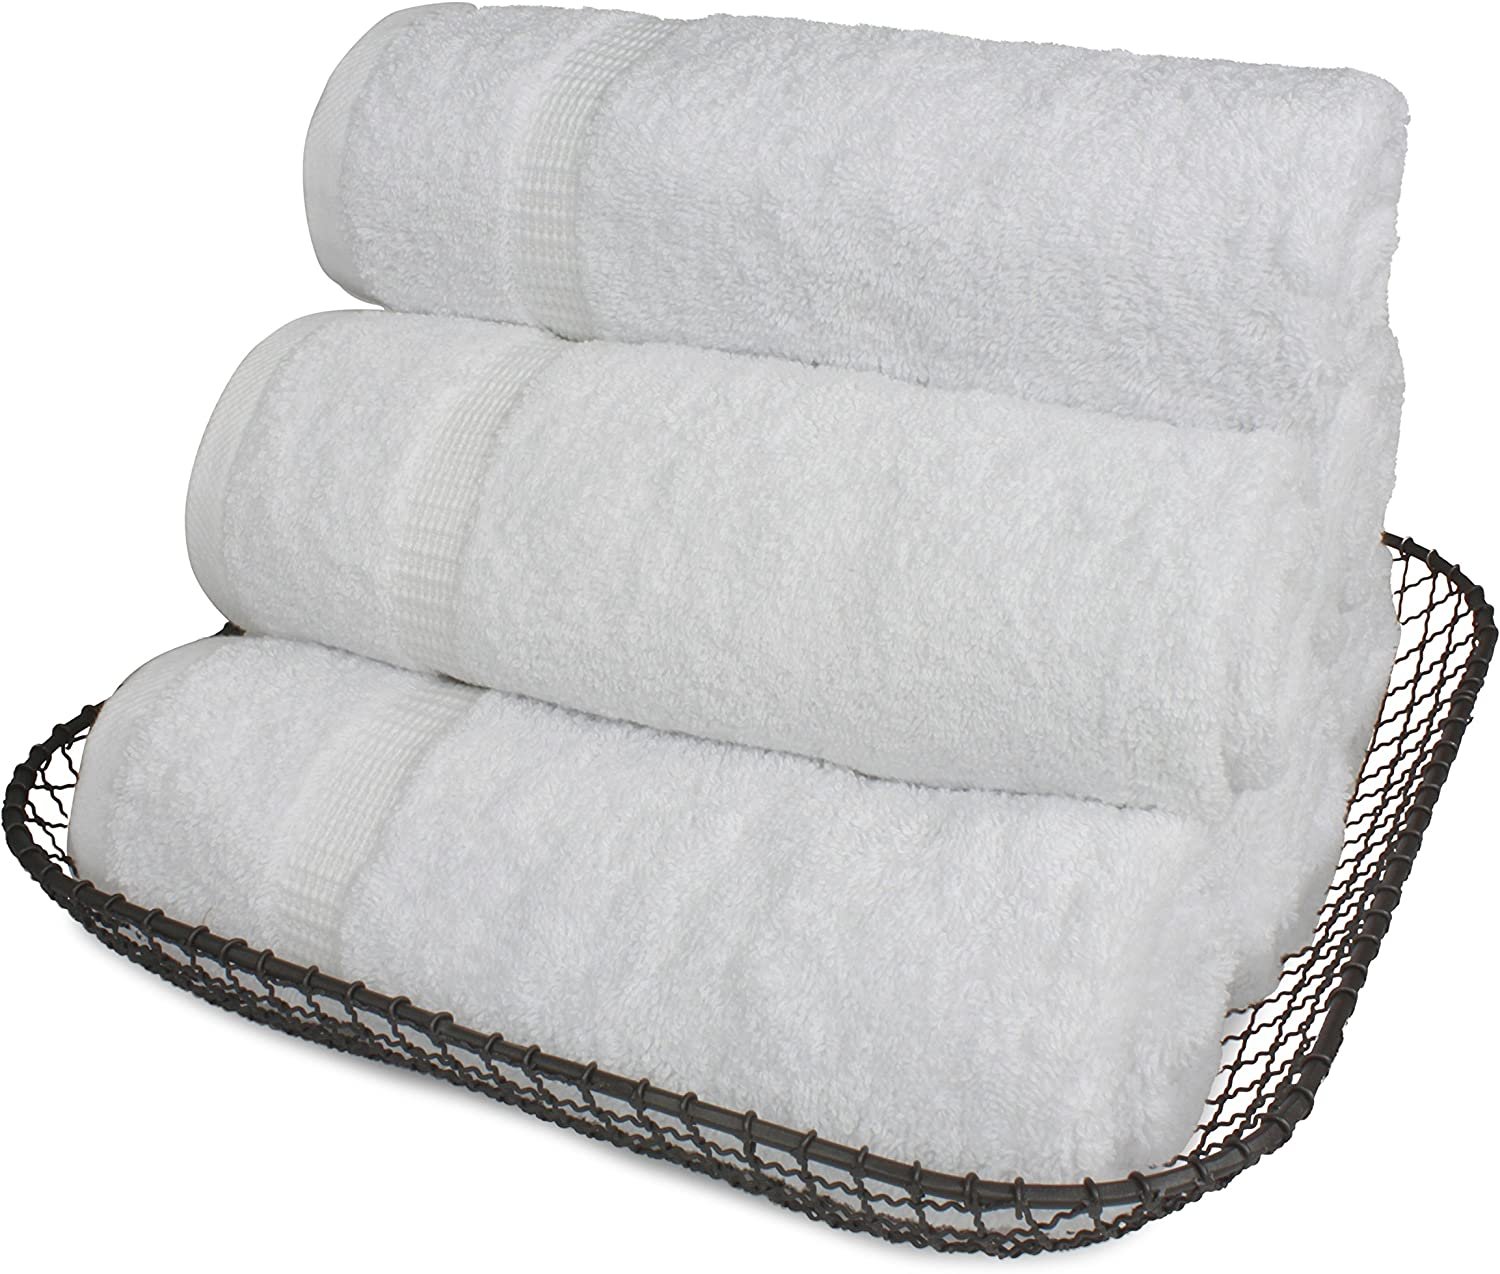 Salbakos Classic Turkish Cotton 3 Piece White Bath Sheet Set - Thick and  New